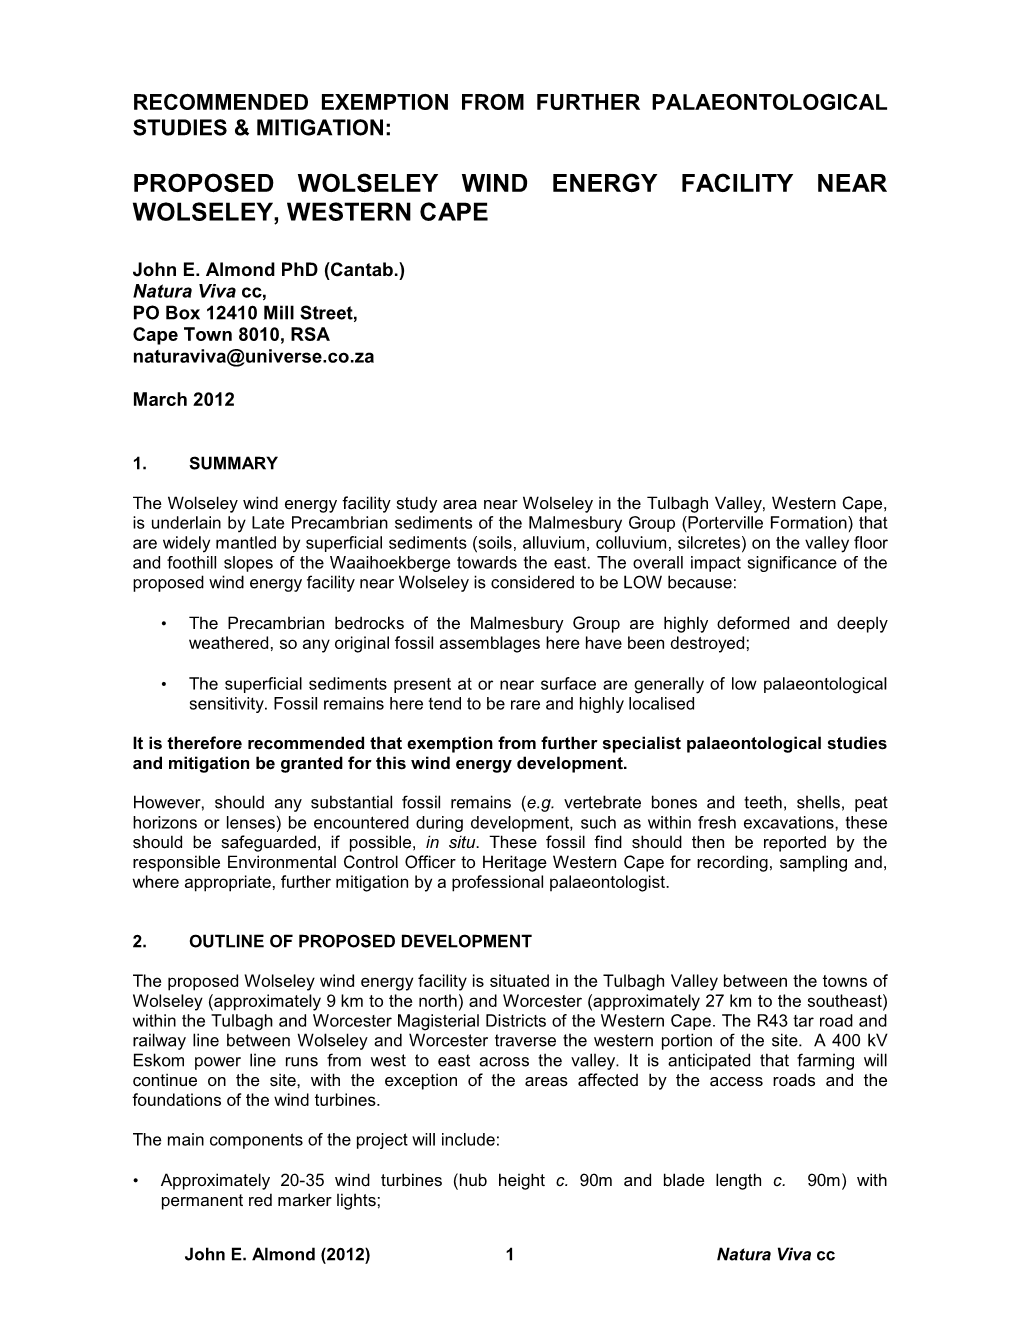 Wolseley Wind Farm Paleo Specialist Scoping Report Needs Final Check by MN